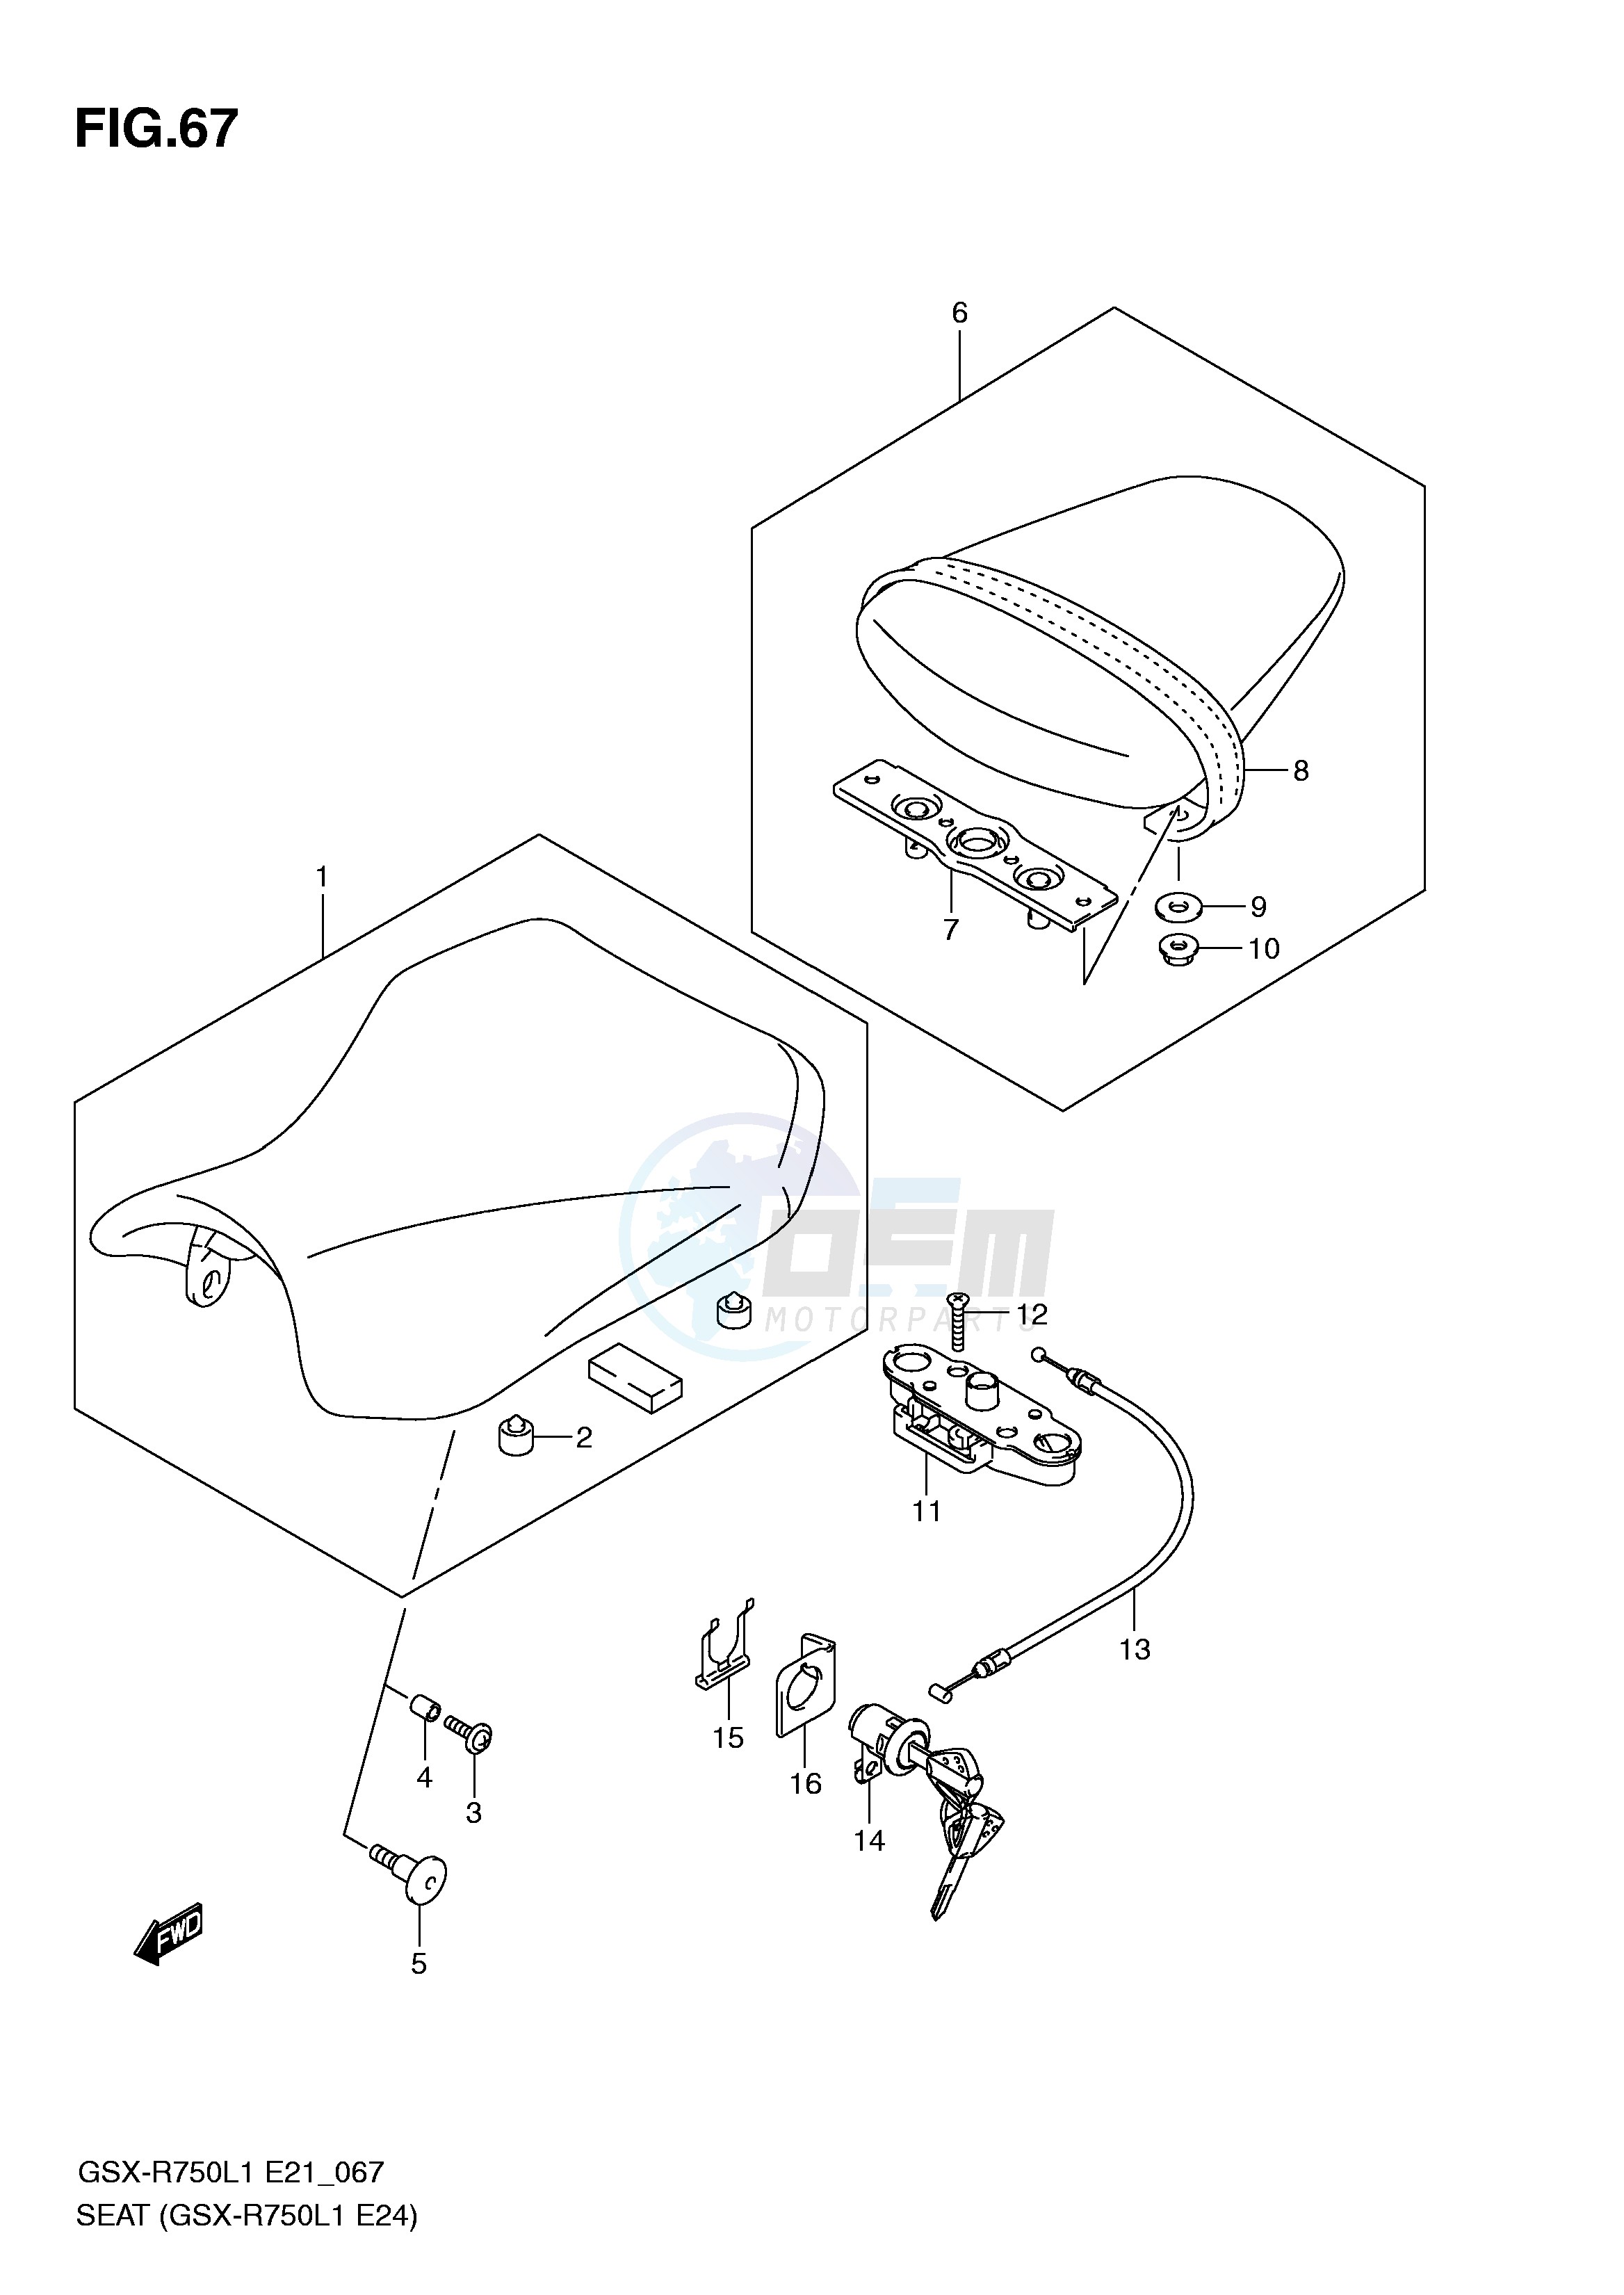 SEAT (GSX-R750L1 E24) blueprint